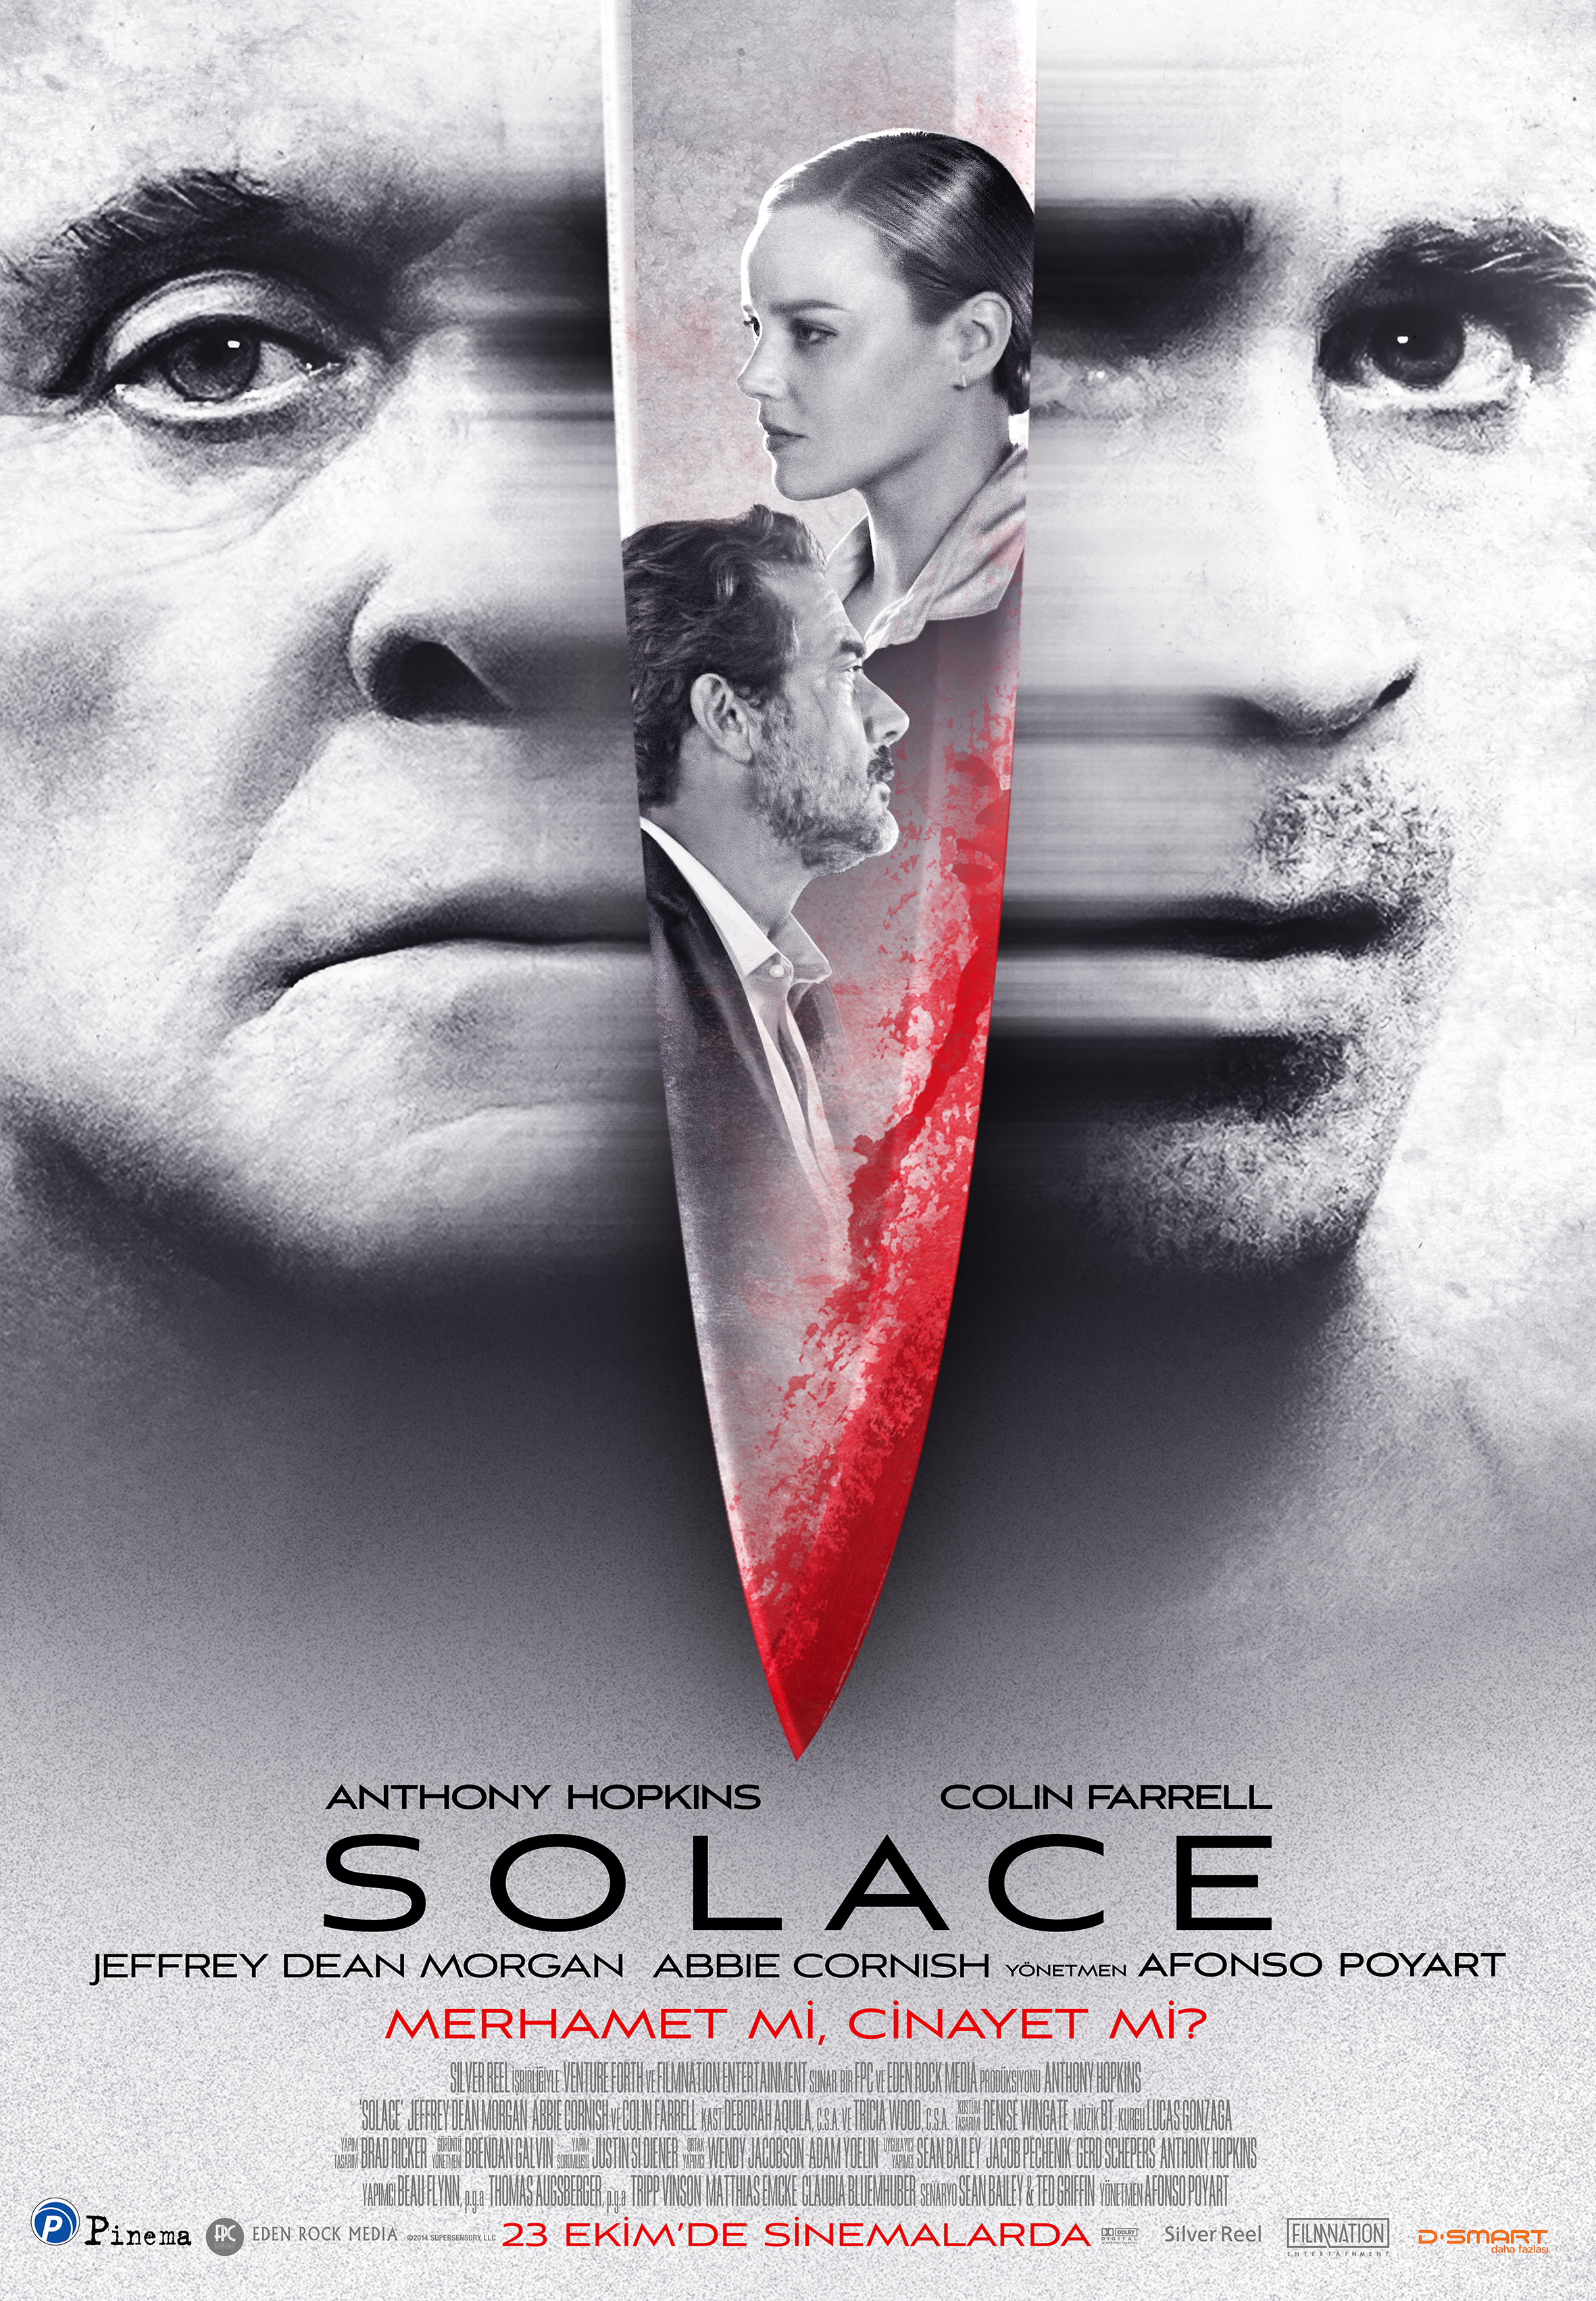 Watch Solace Online Film 2016 1080P